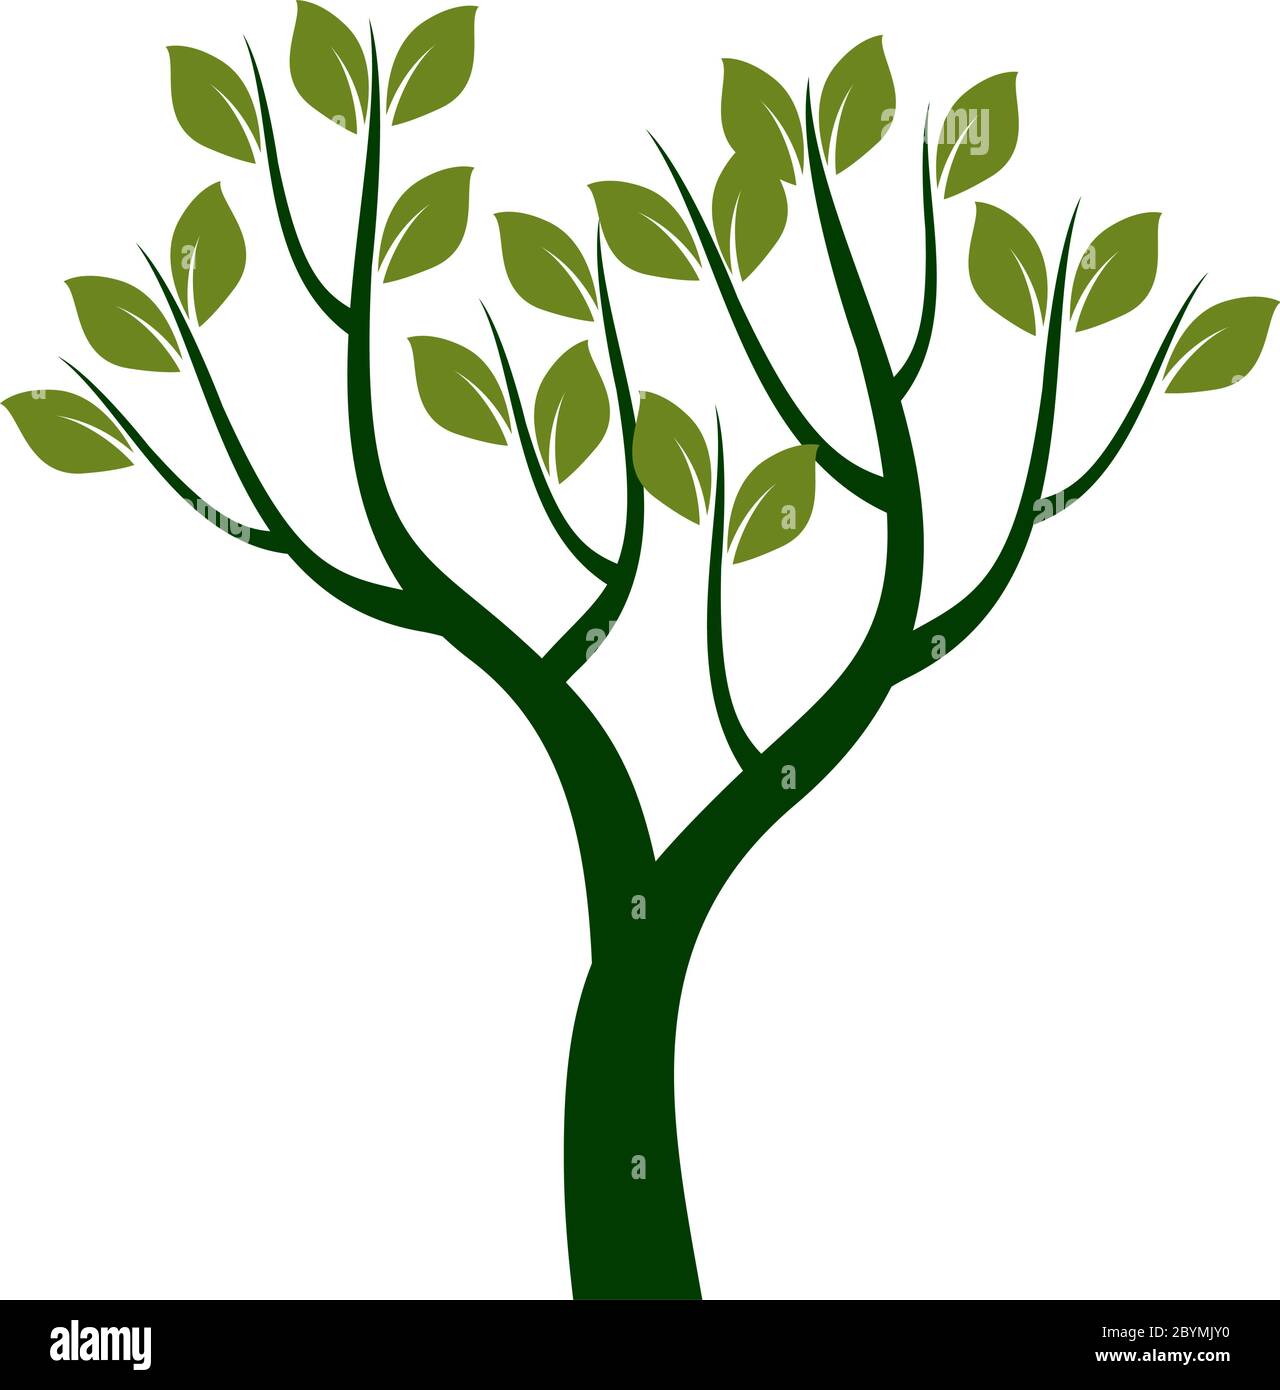 Grune Fruhling Und Dekoration Baum Vektorgrafik Pflanze Im Garten Stock Vektorgrafik Alamy